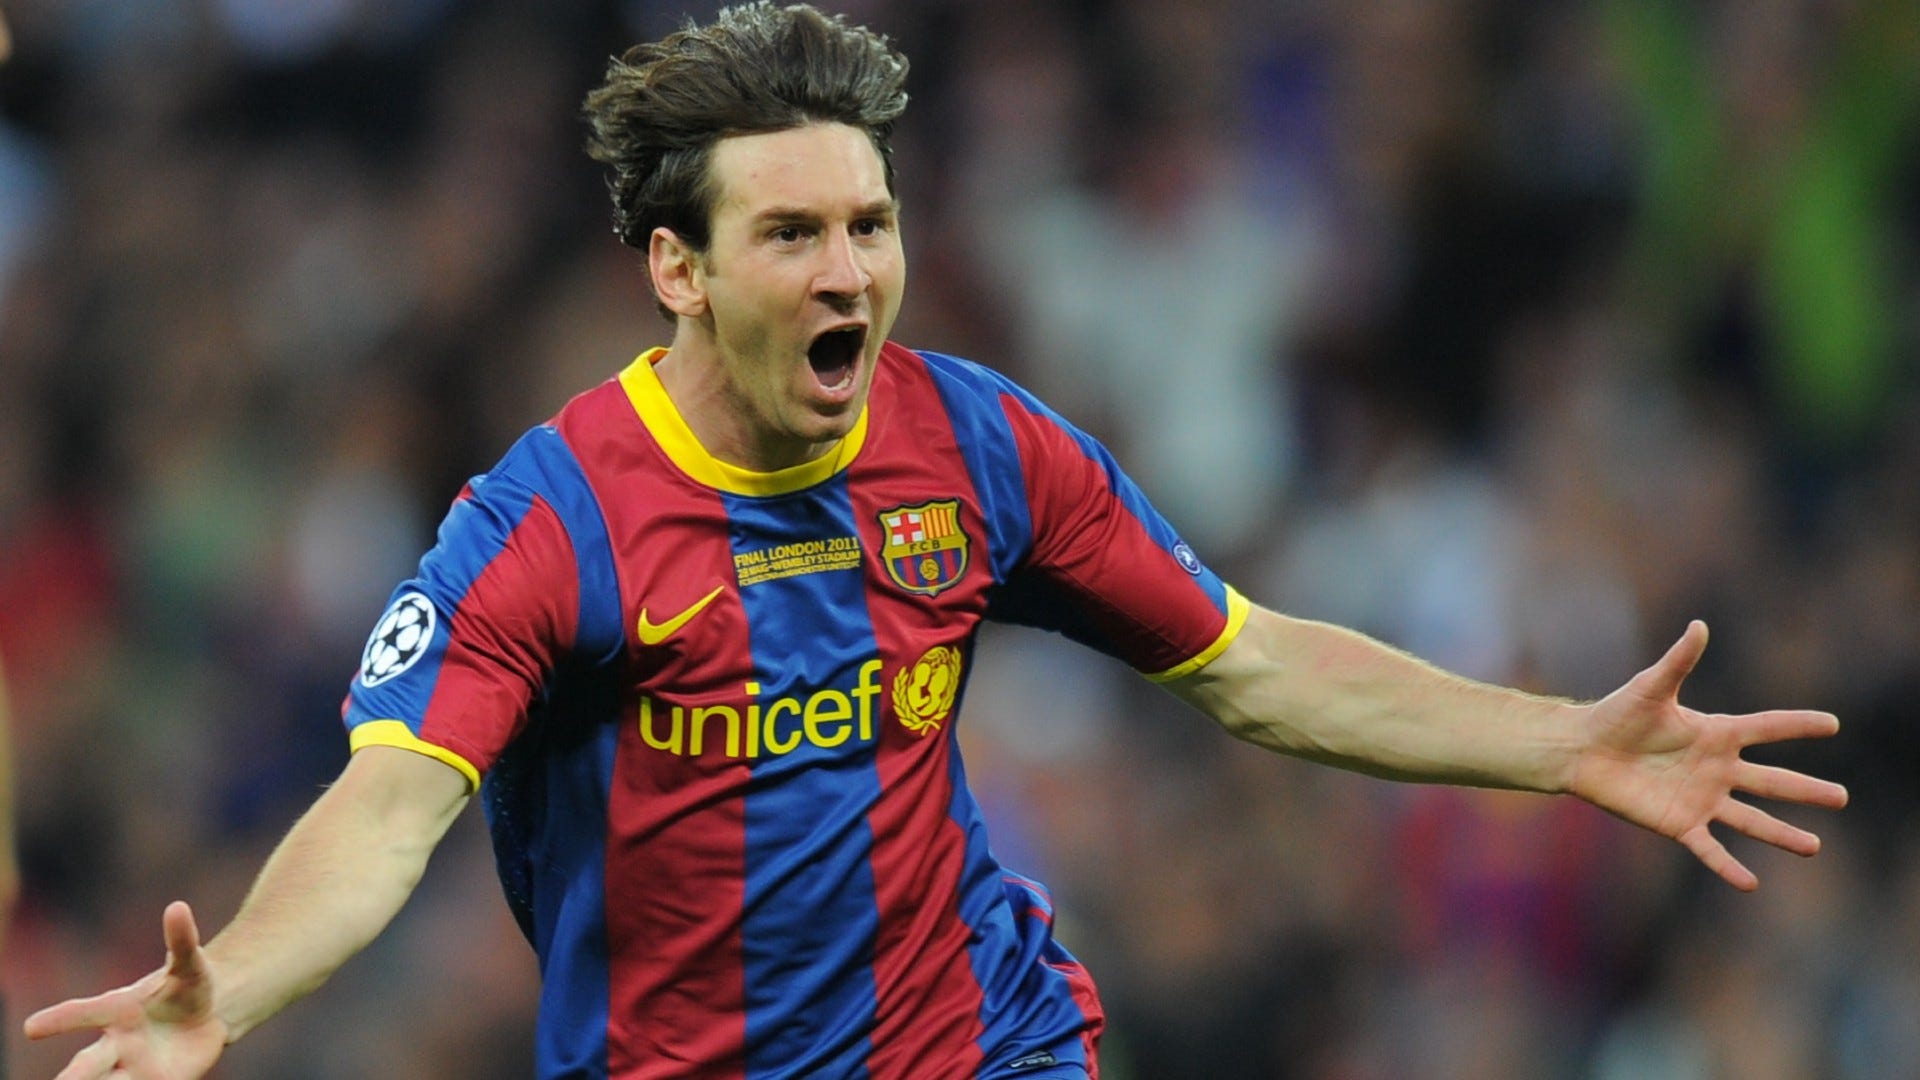 Messi-Barca-Man-Utd-UCL- final-2011